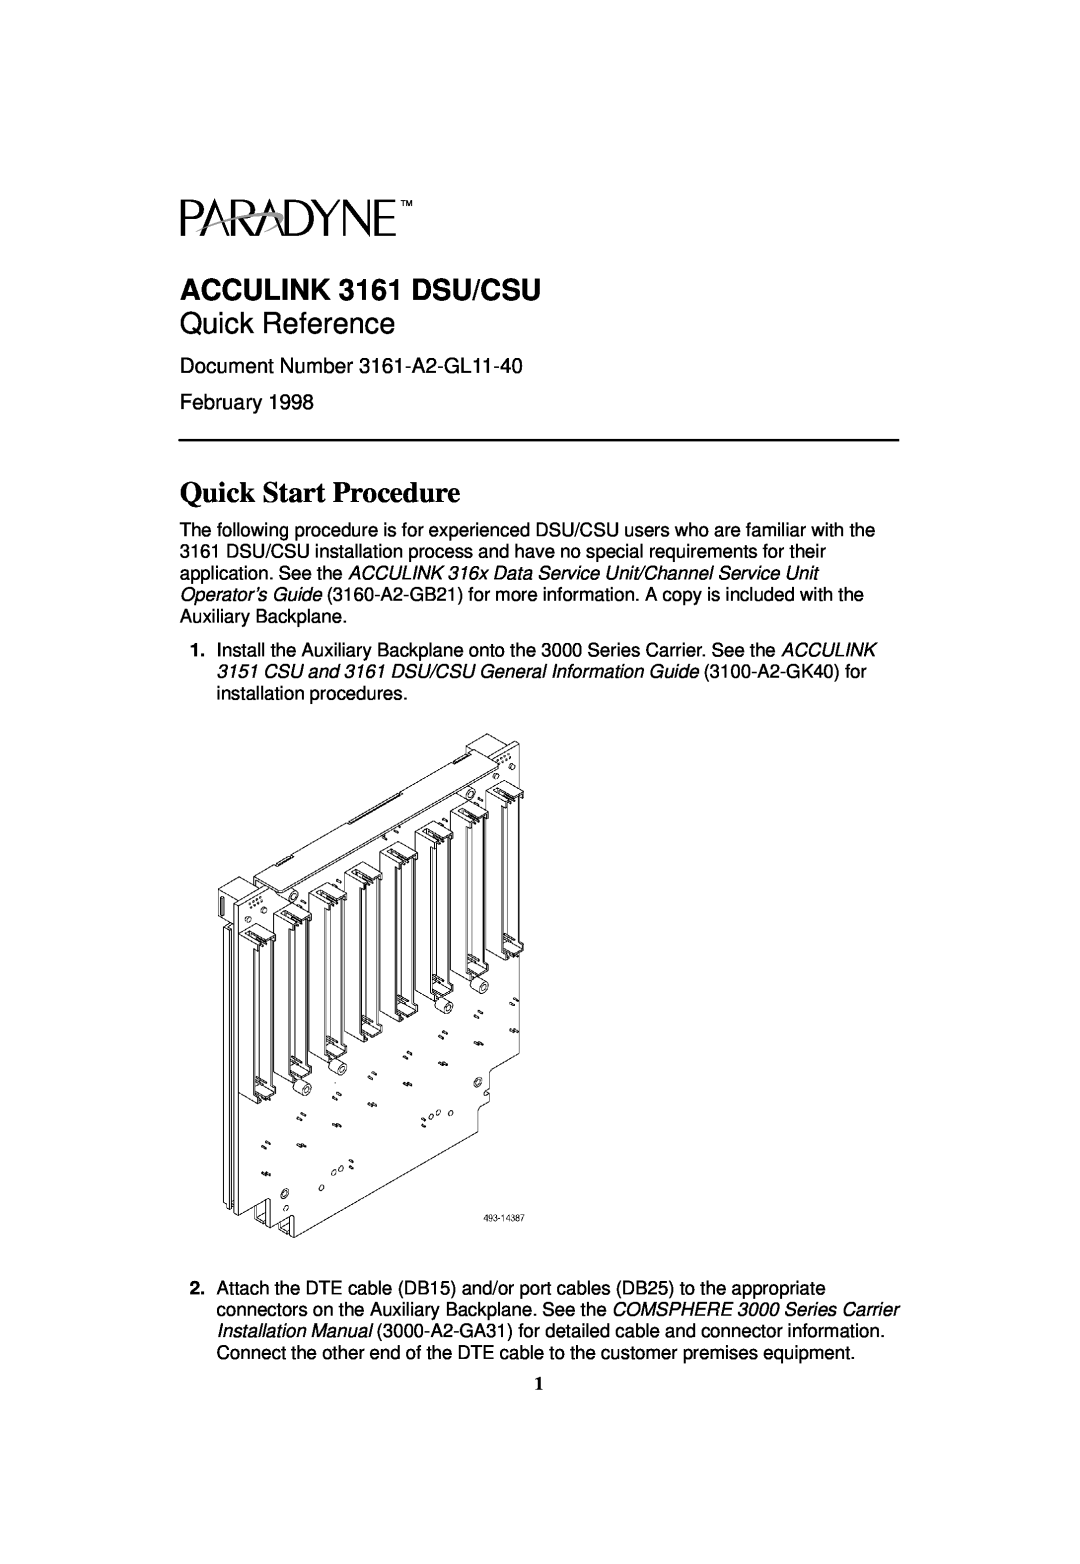 Paradyne 3161 CSU Quick Start Procedure, ACCULINK 3161 DSU/CSU, Quick Reference, Document Number 3161-A2-GL11-40 February 